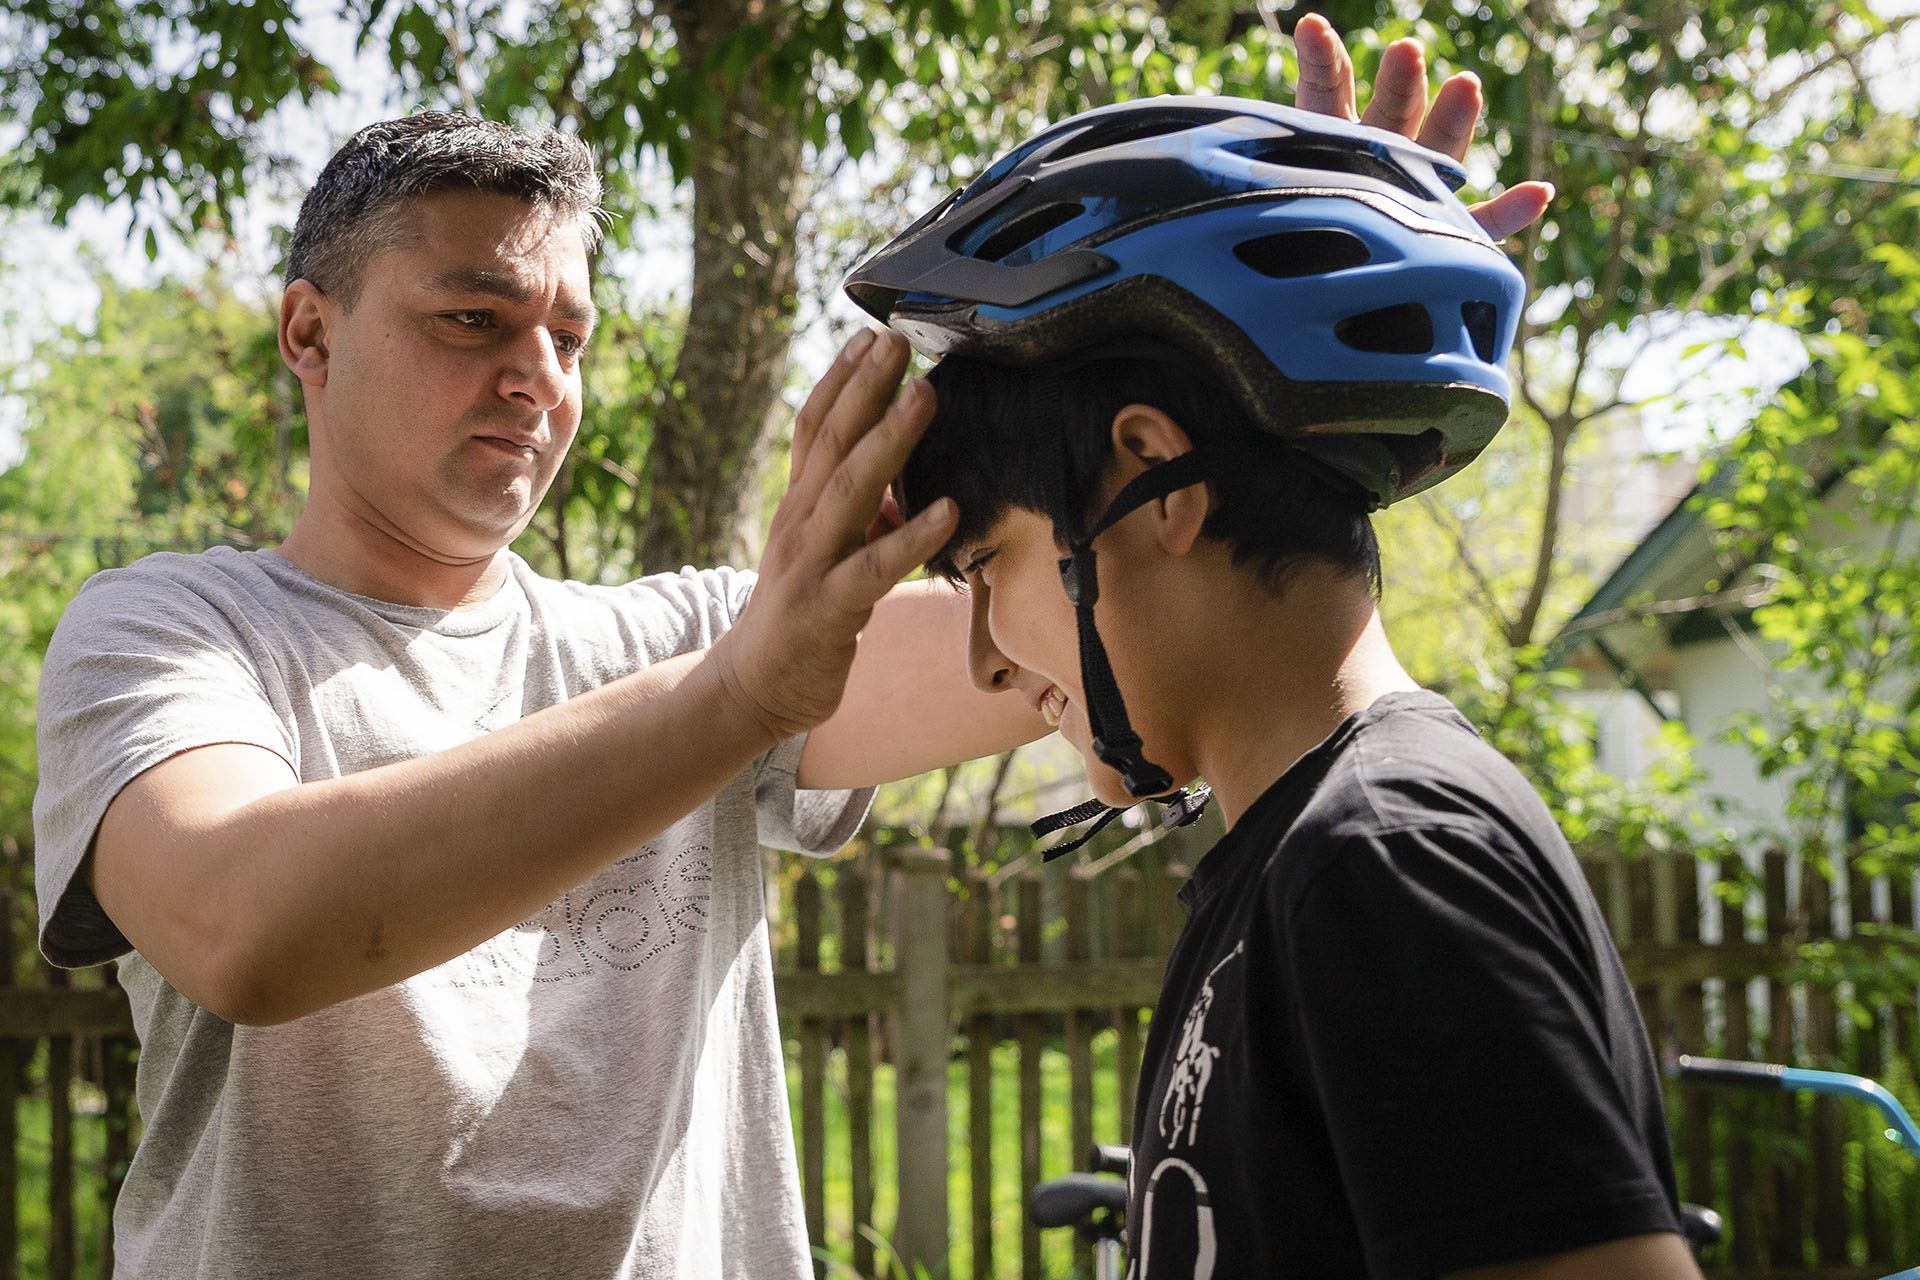 Mohammad Aimal puts a bike helmet on his nephew, Yahya Nazari